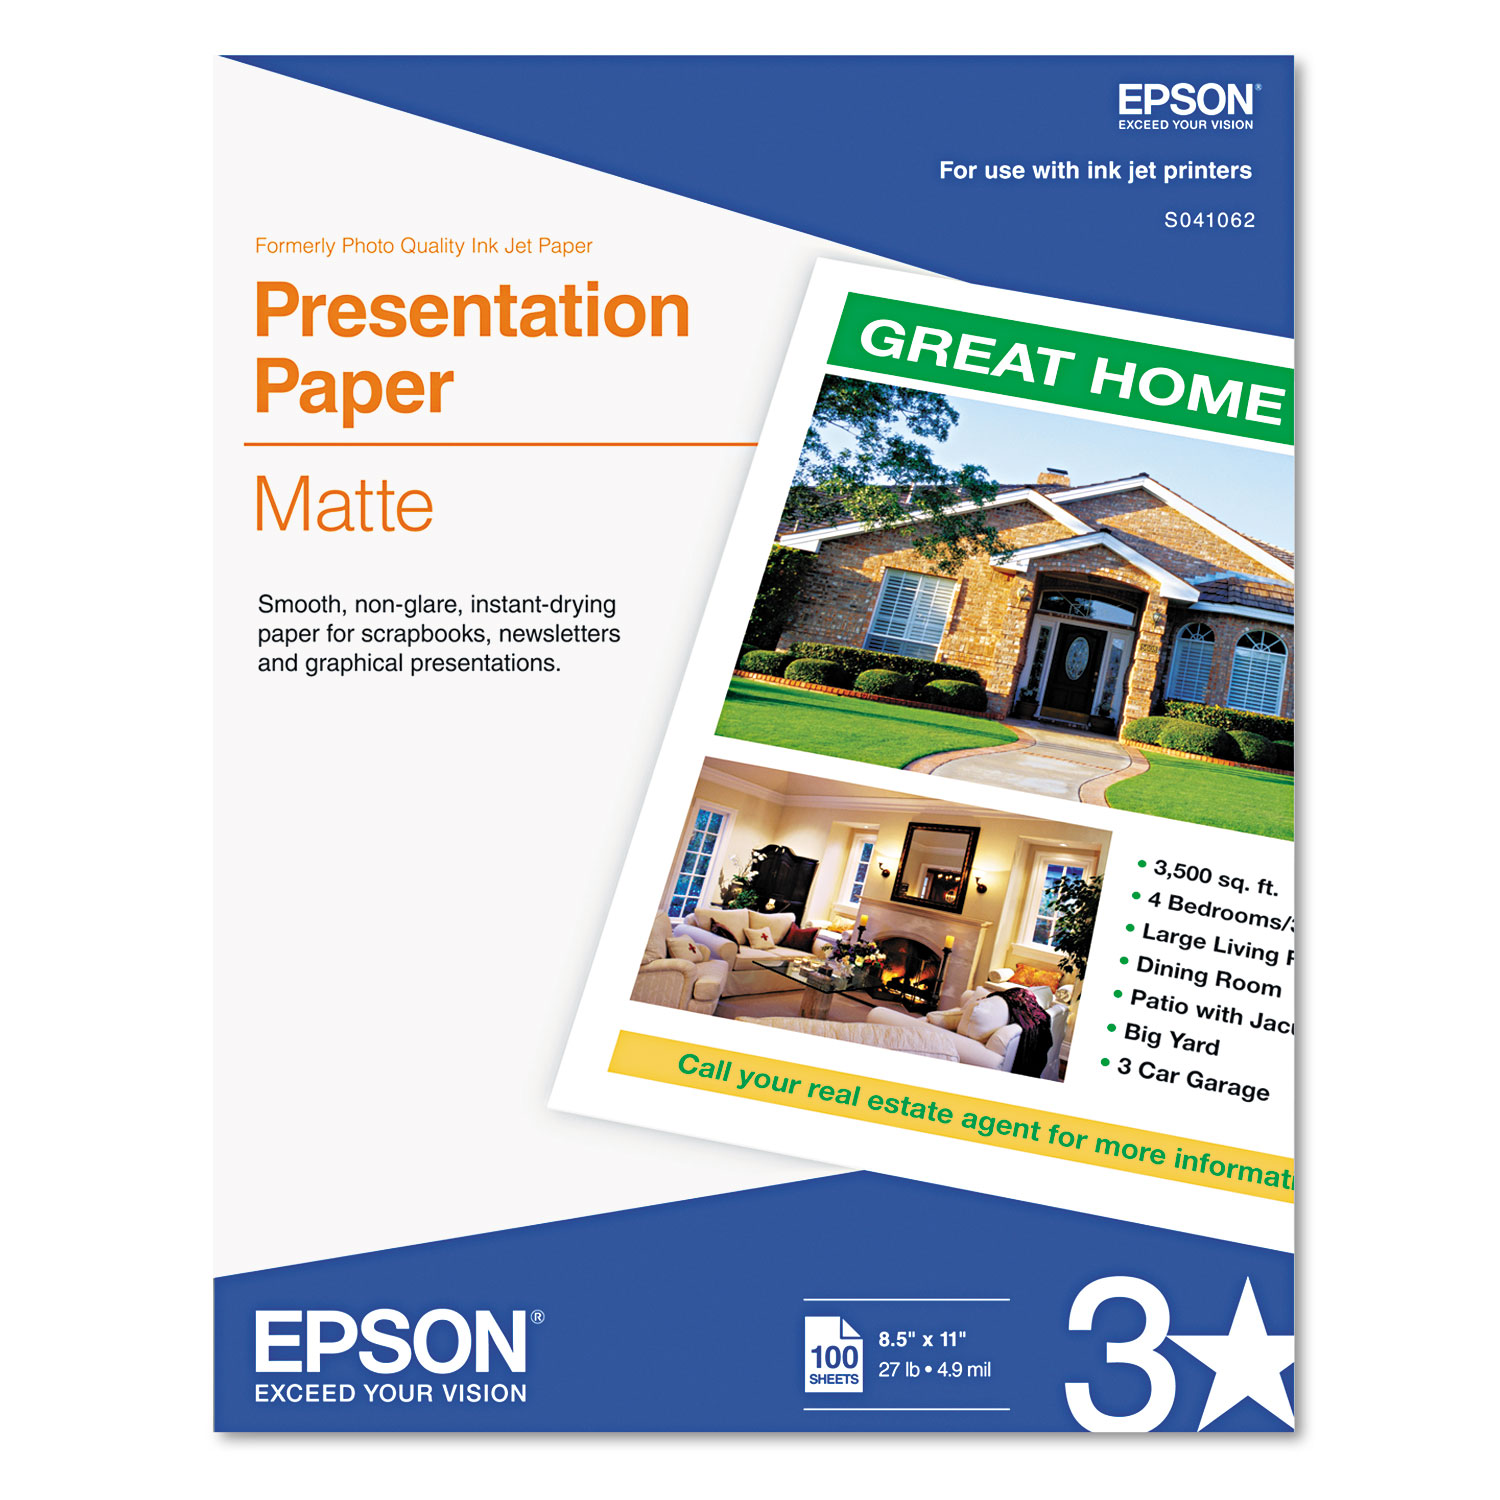 Presentation Paper Matte